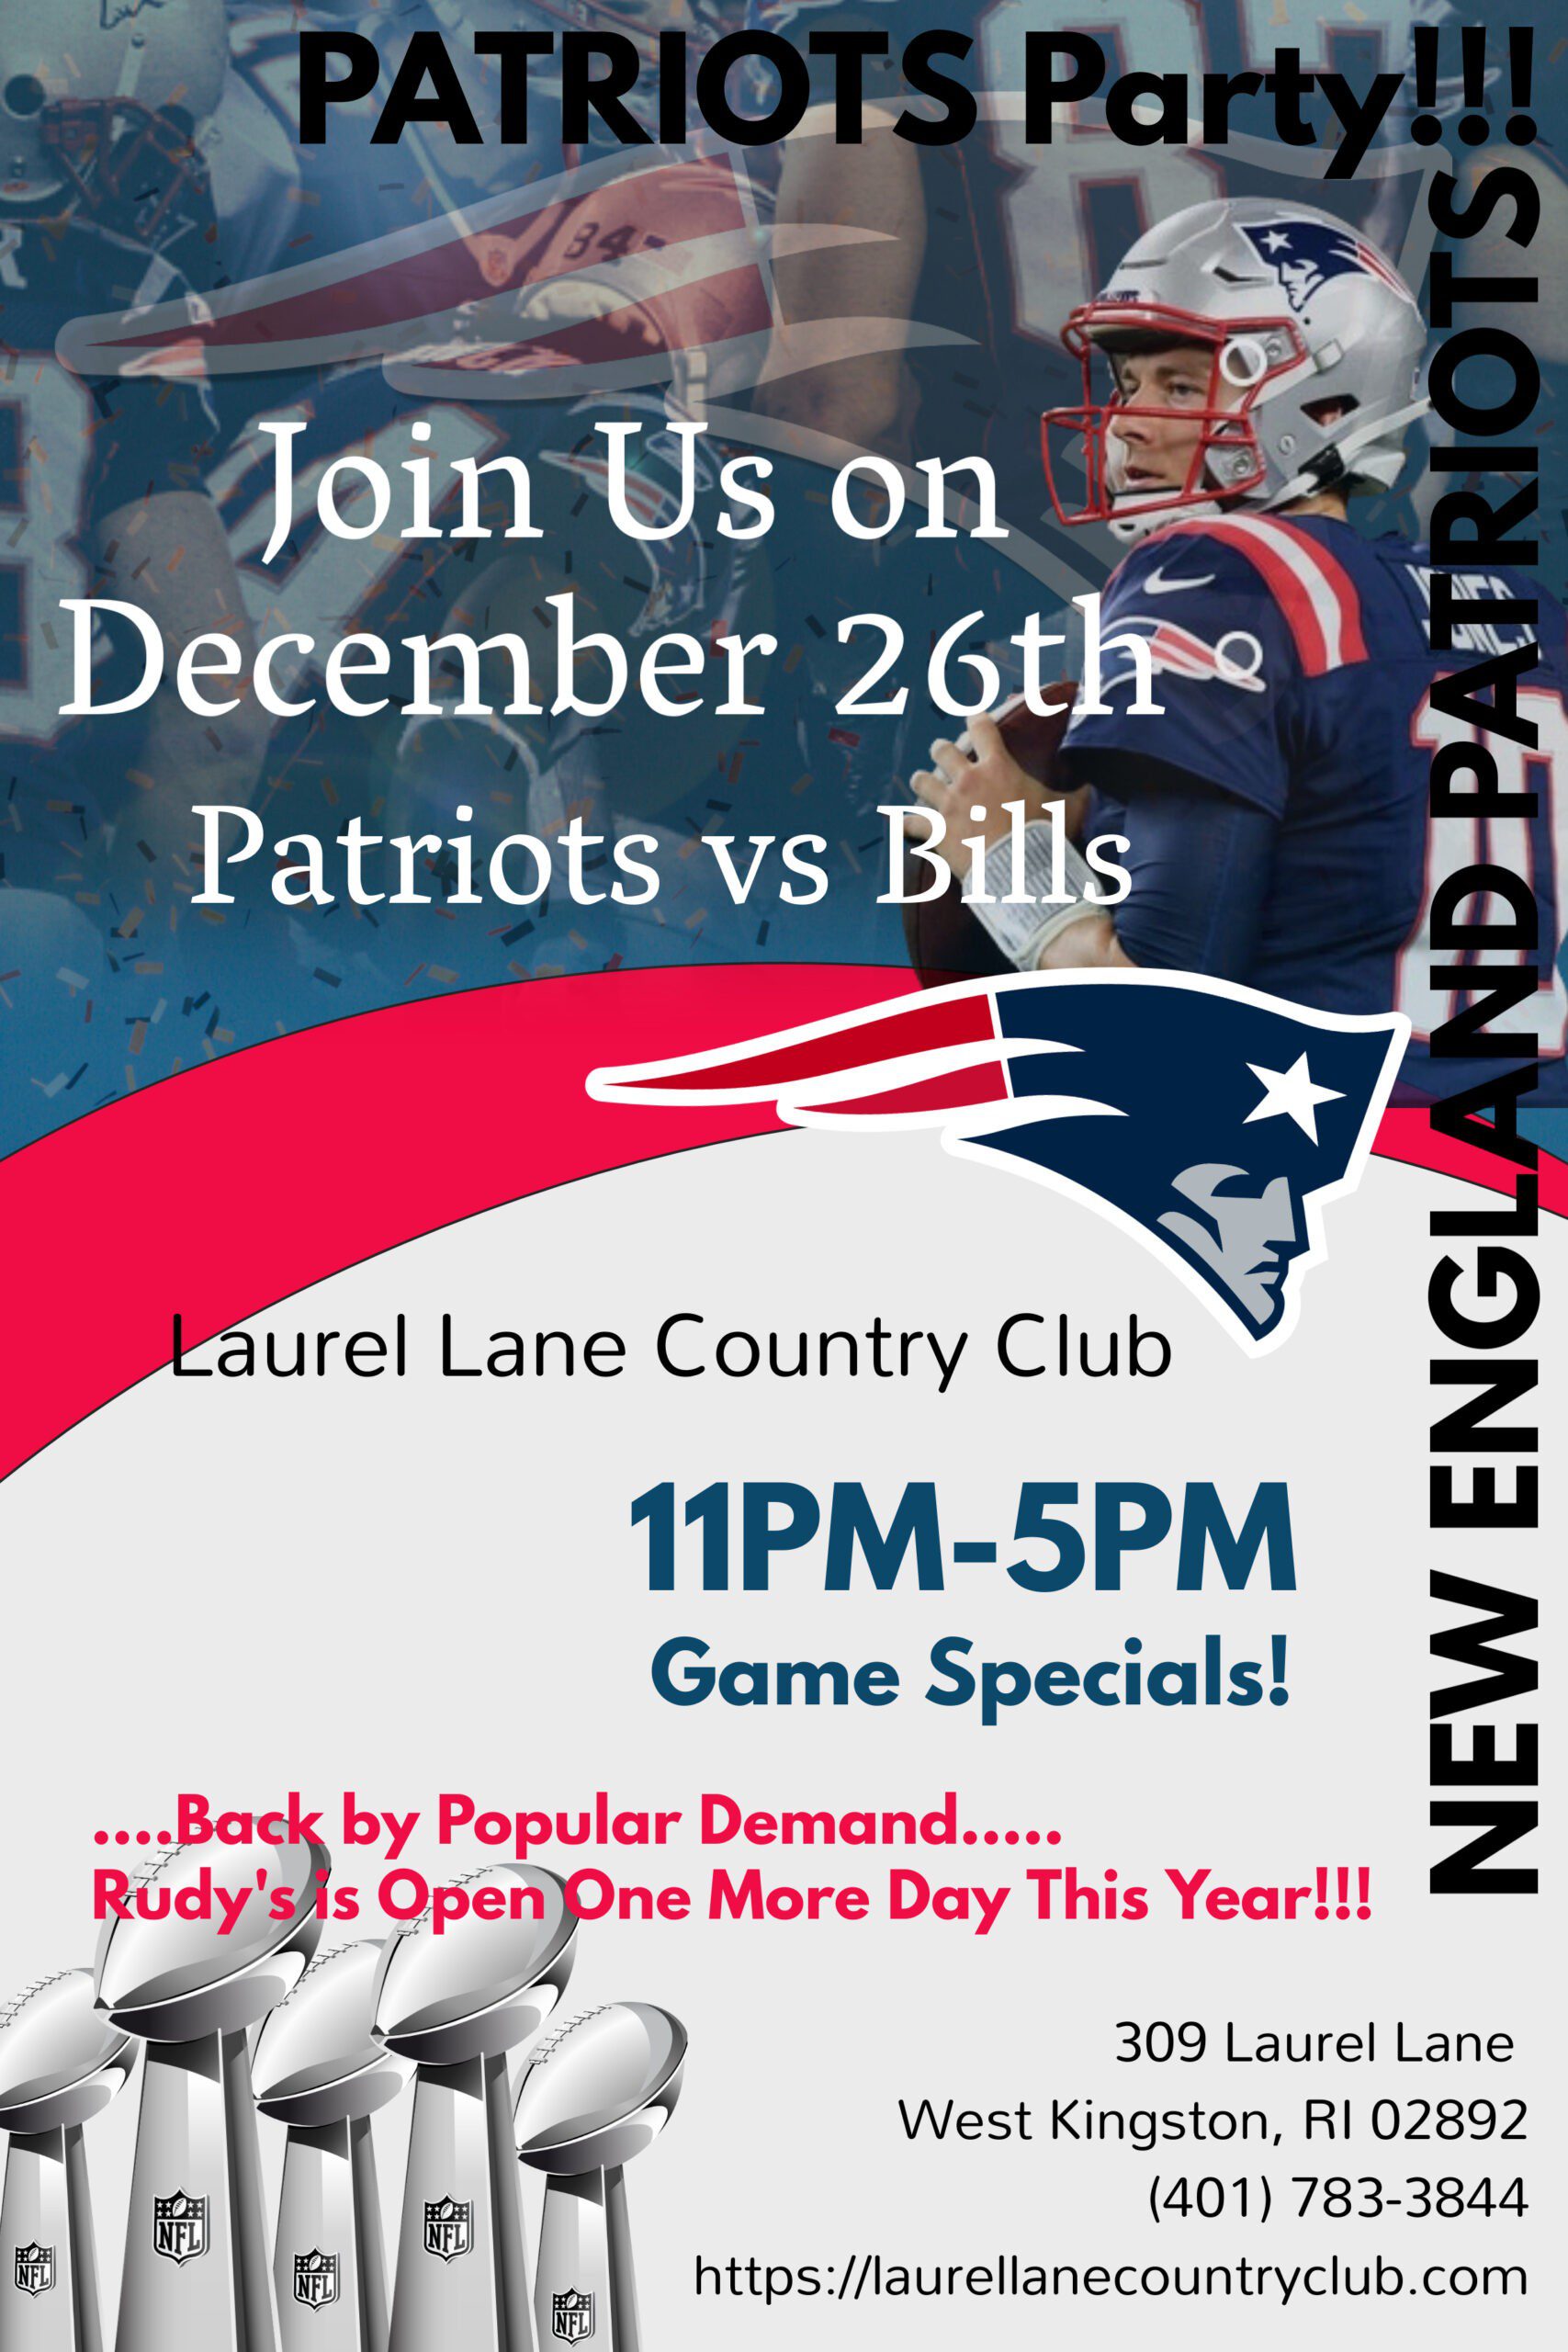 Patriots Party at Laurel Lane Country Club